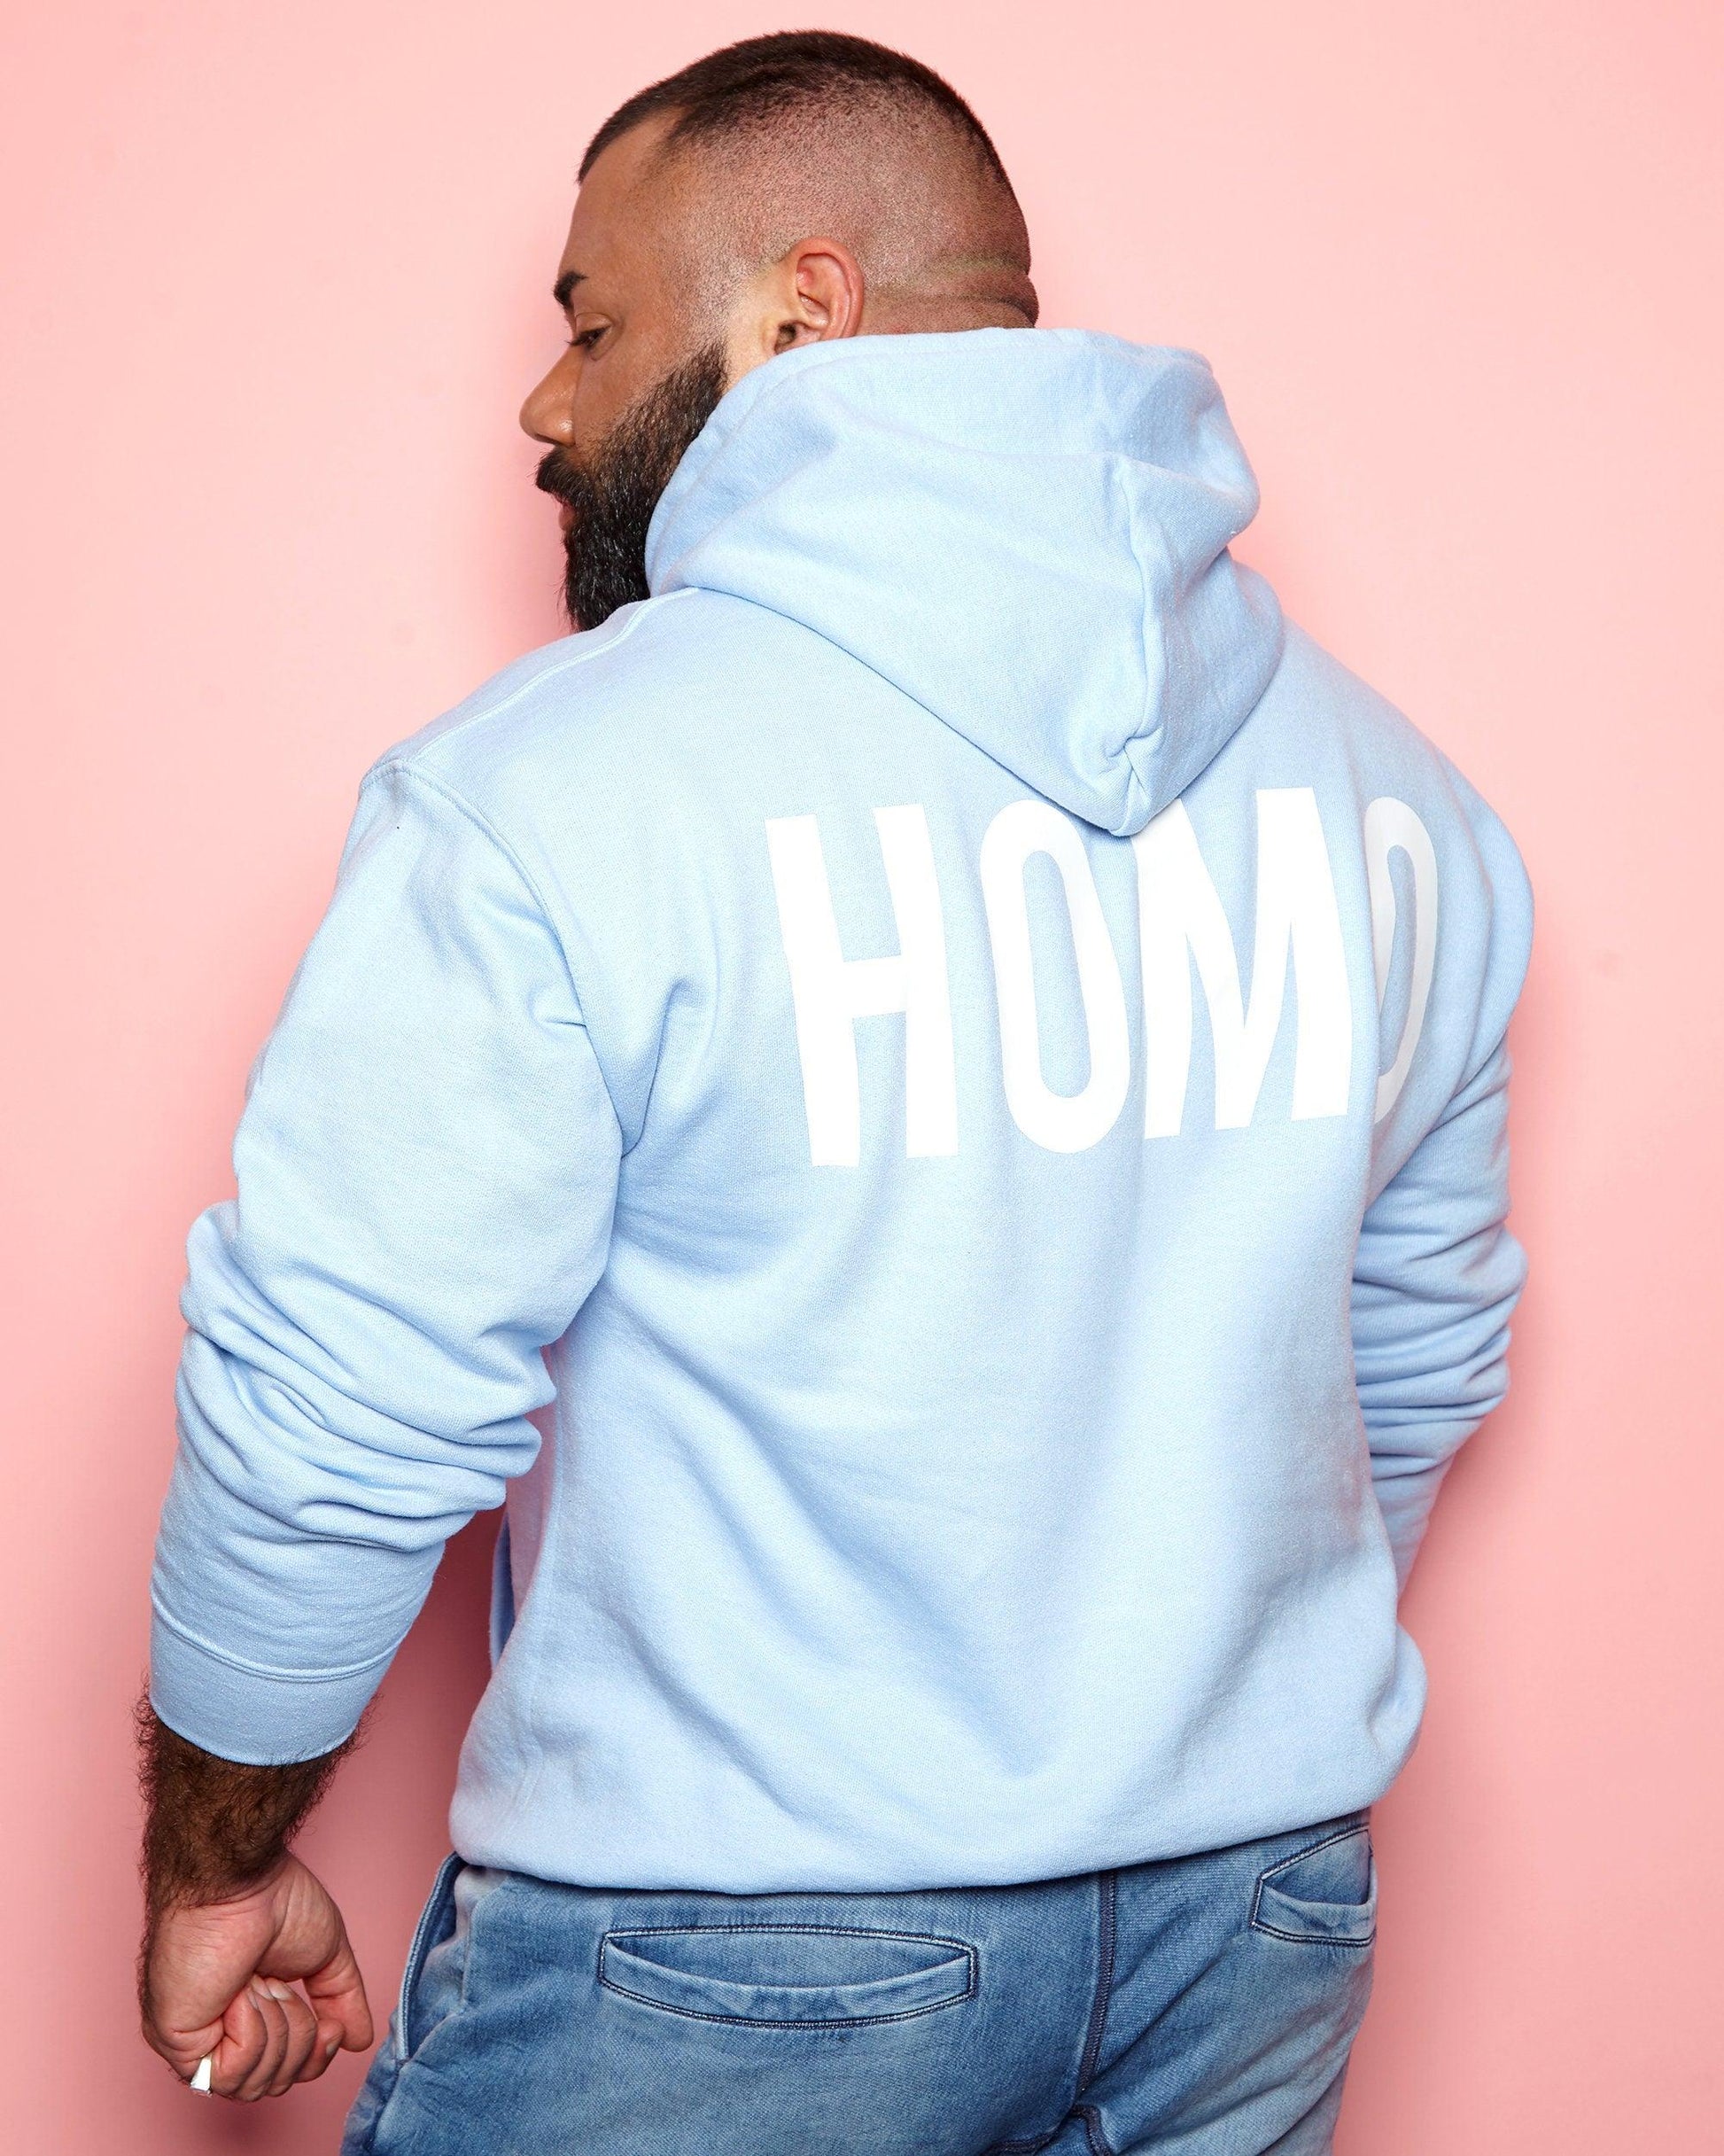 HOMO hoodie - White on Light Blue. - HOMOLONDON